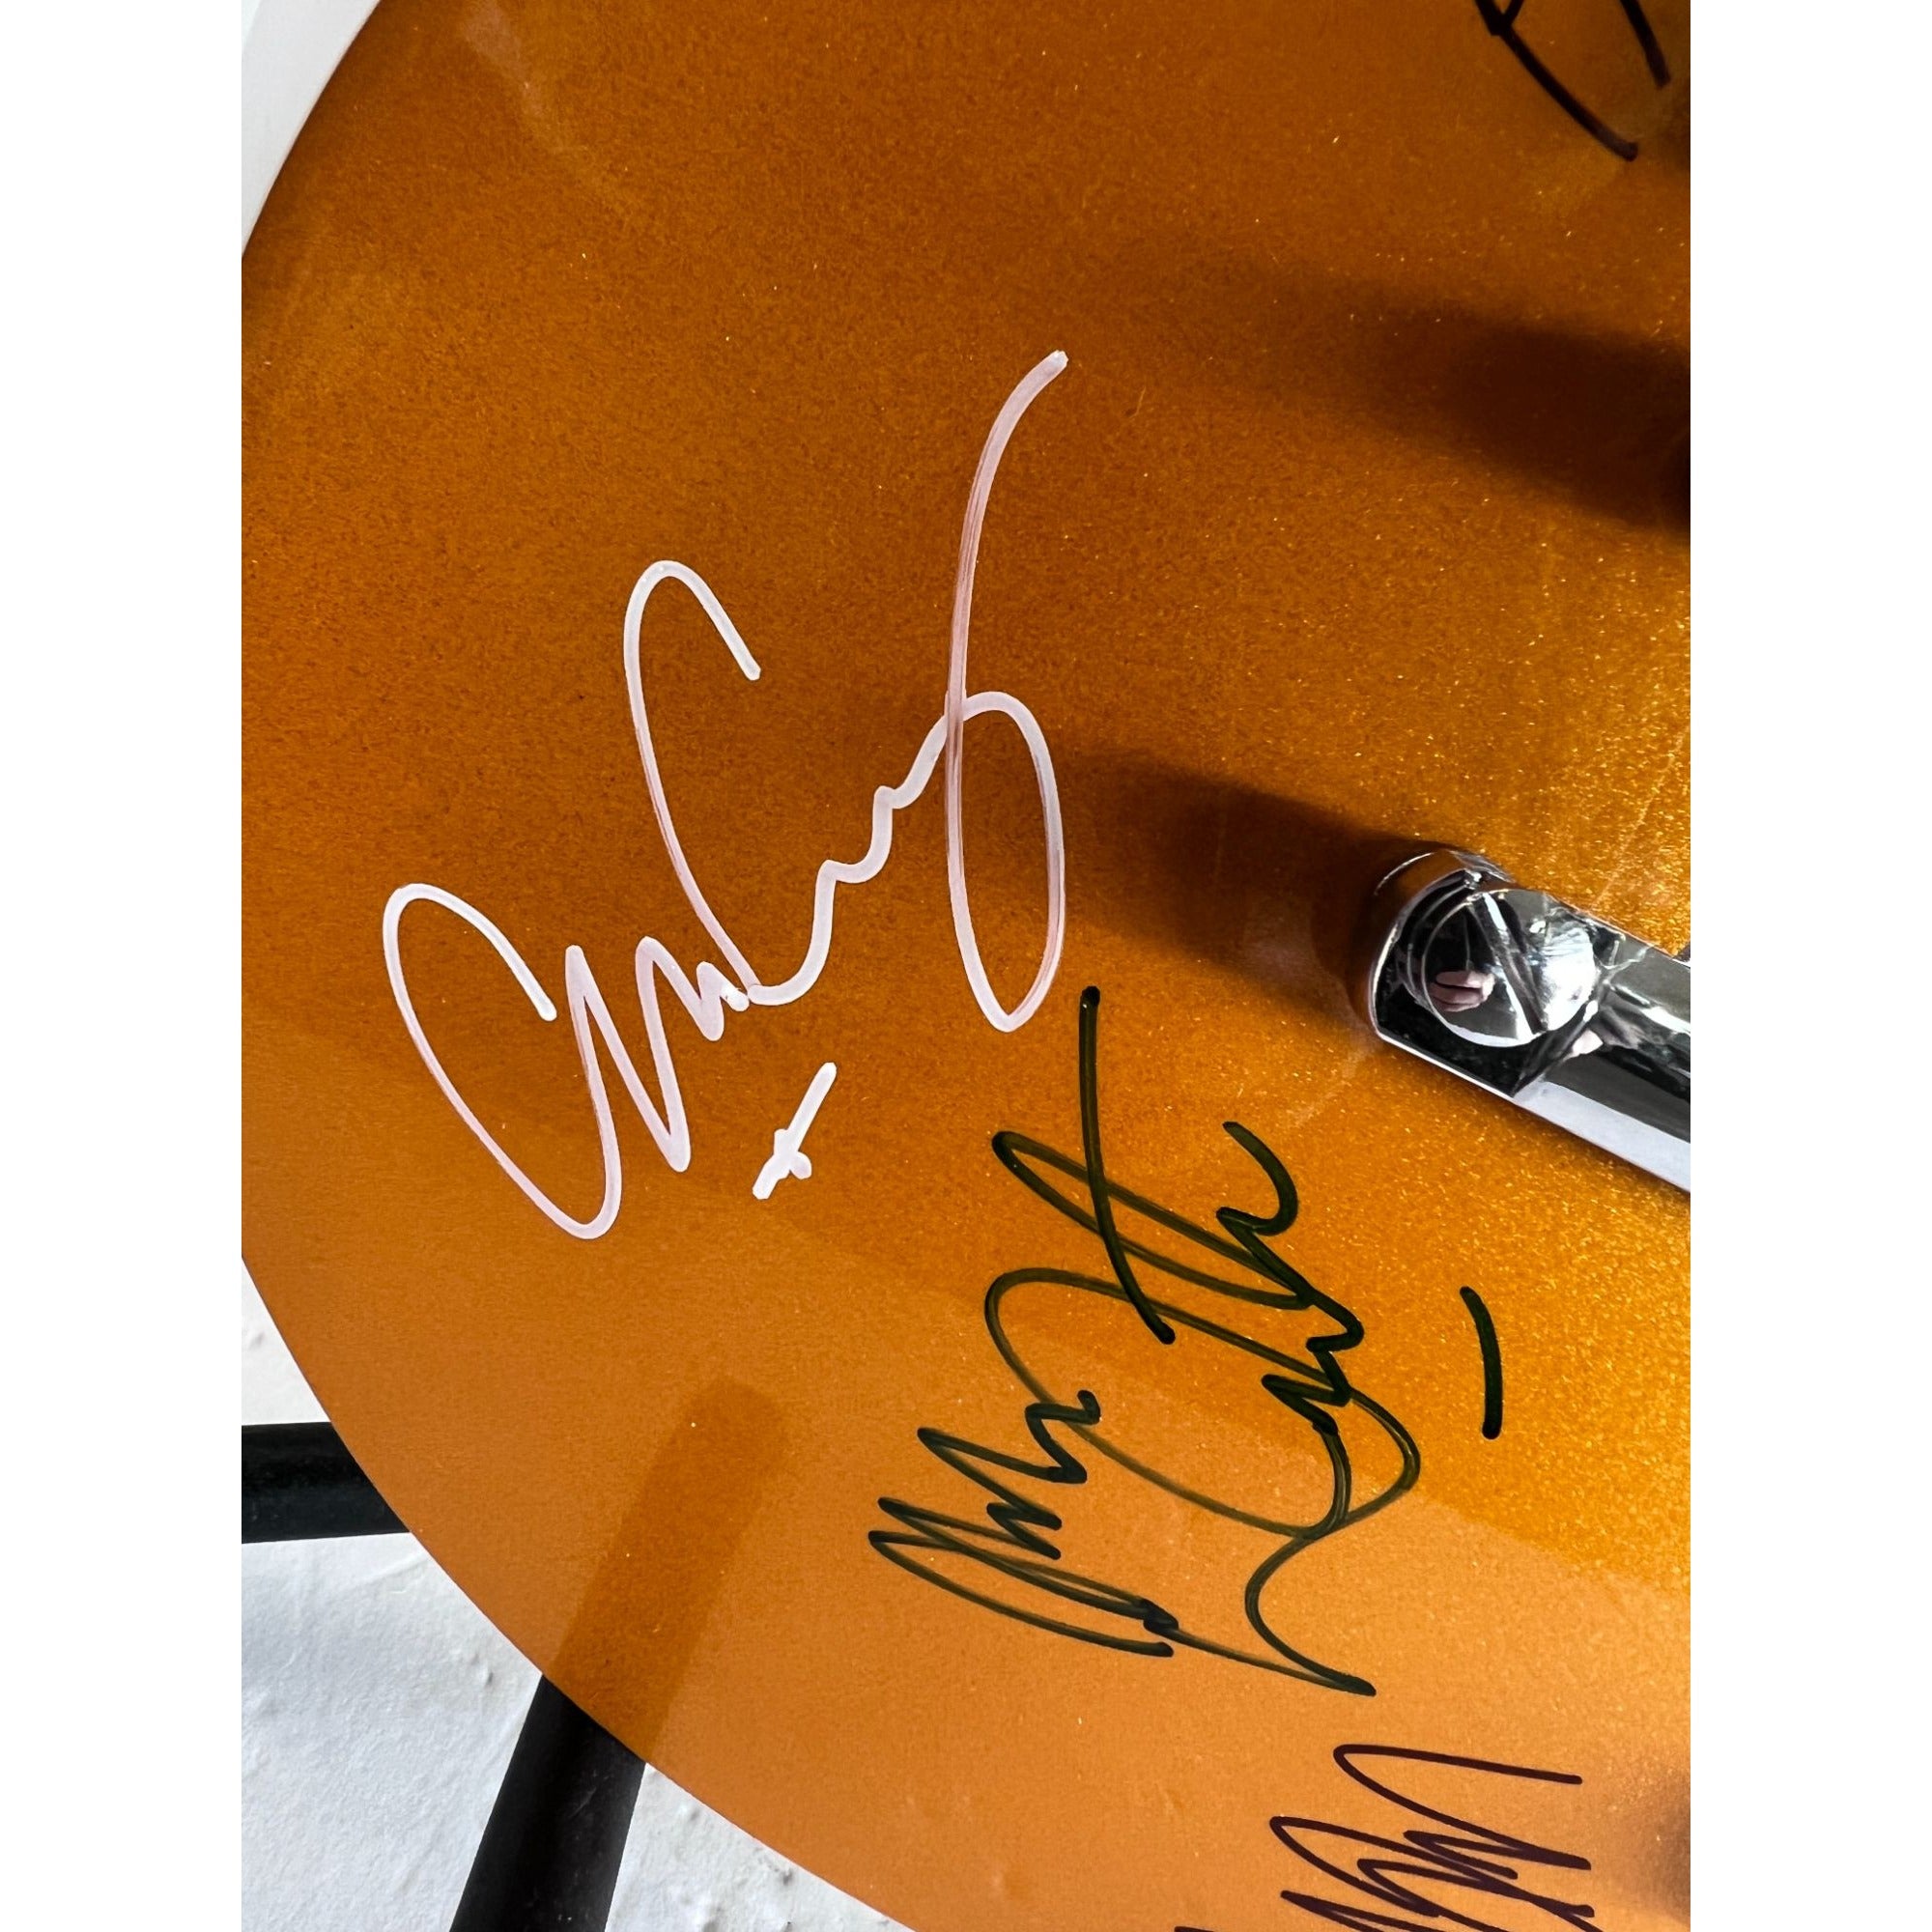 Def Leppard Joe Elliott Vivian Campbell Rick Savage Rick Allen Phil Collen les paul electric guitar signed with proof